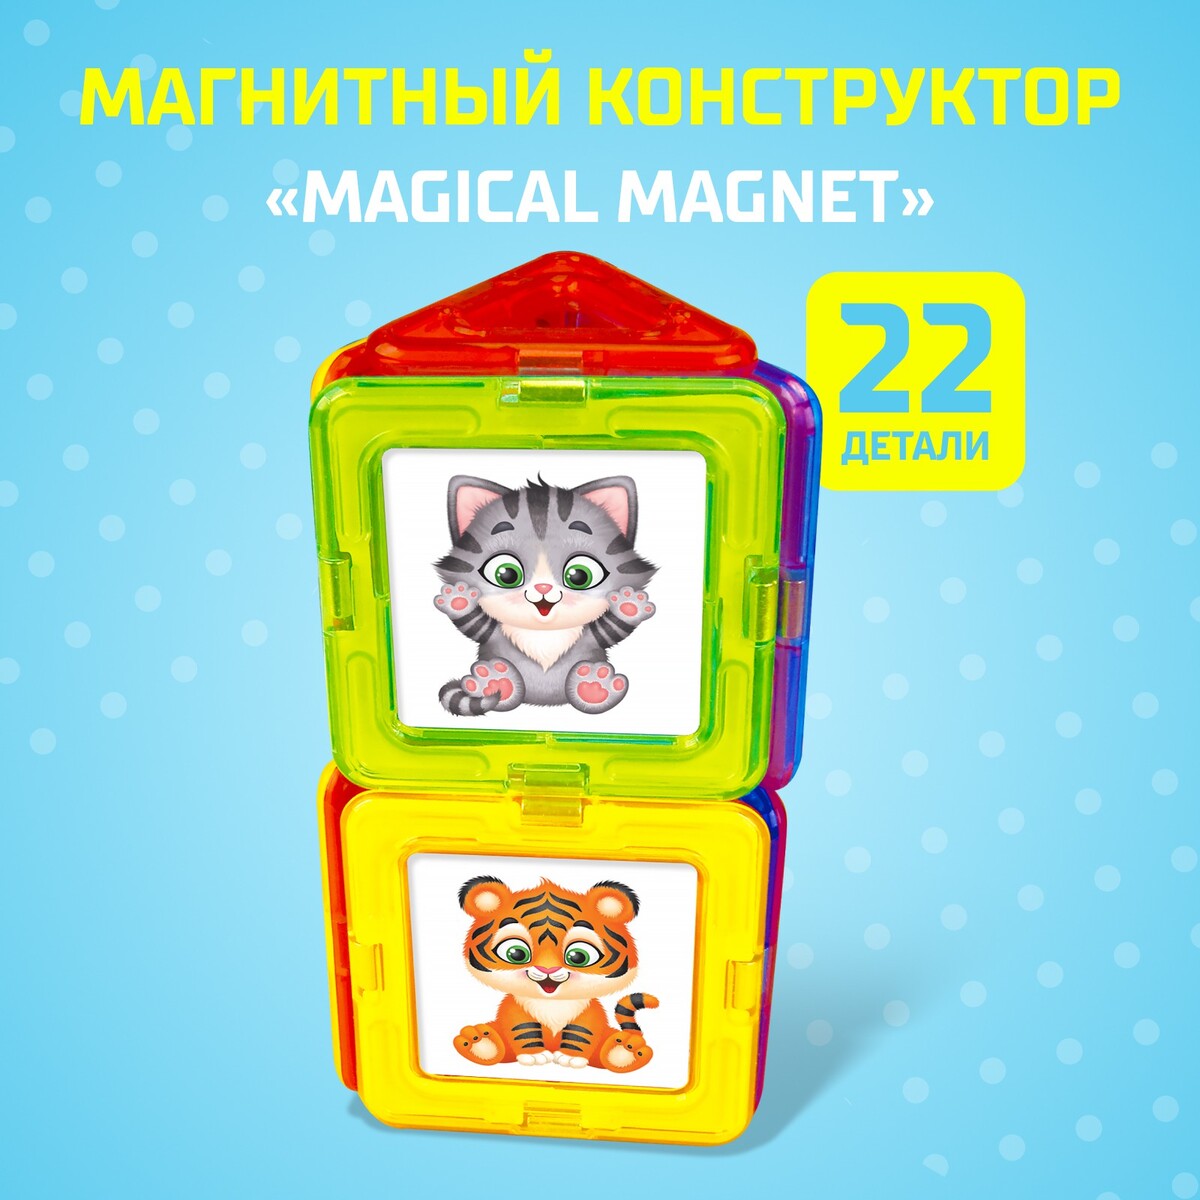   magical magnet, 22 ,  